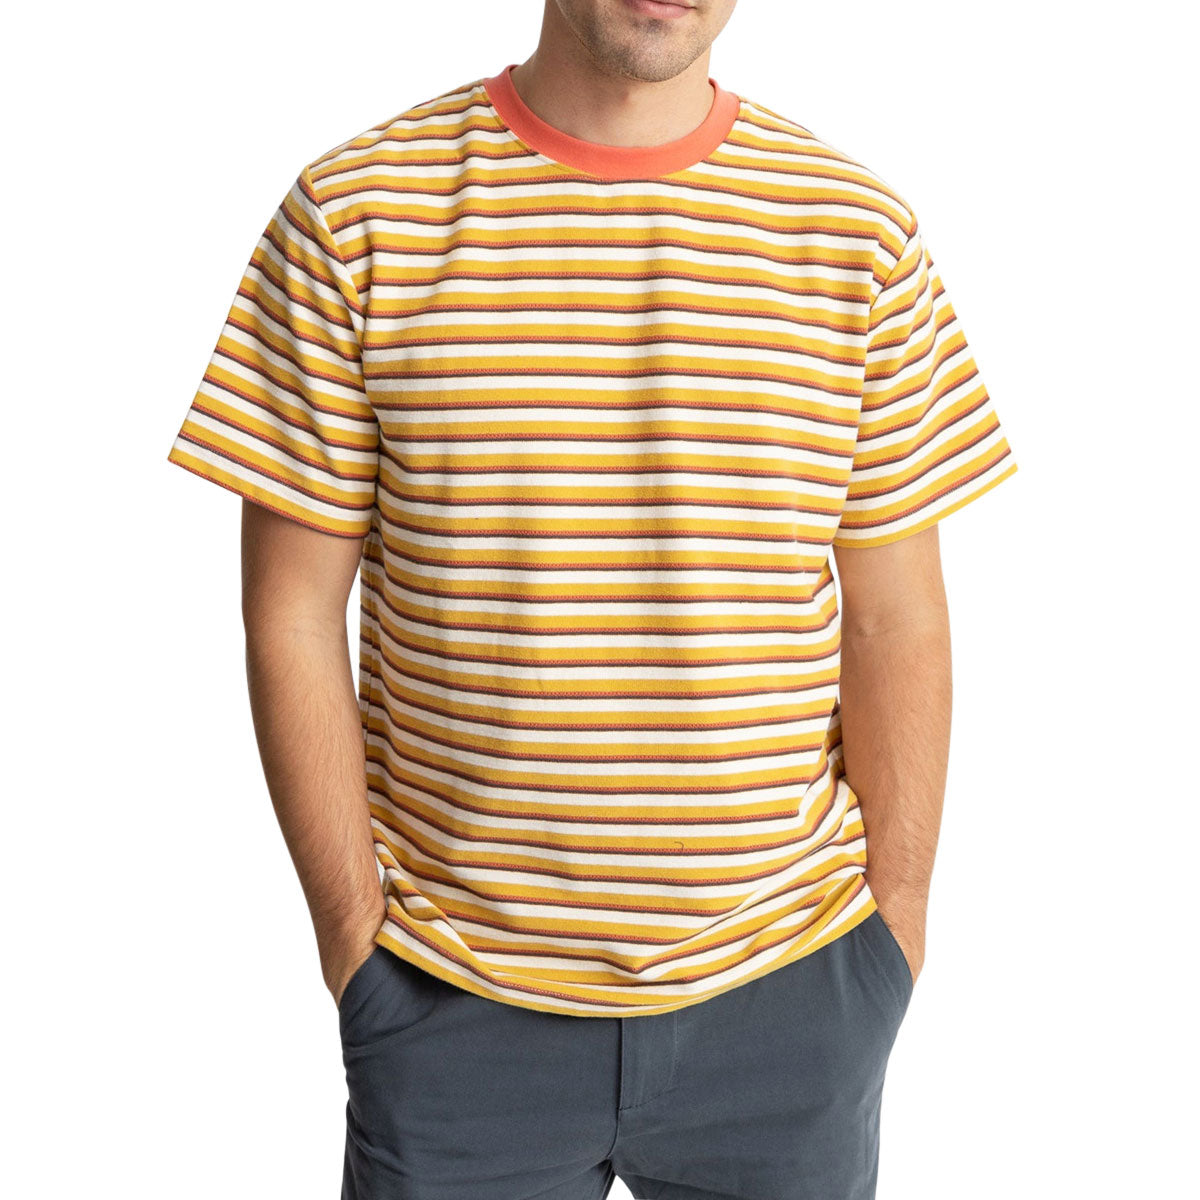 Rhythm Vintage Stripe T-Shirt - Mustard image 2